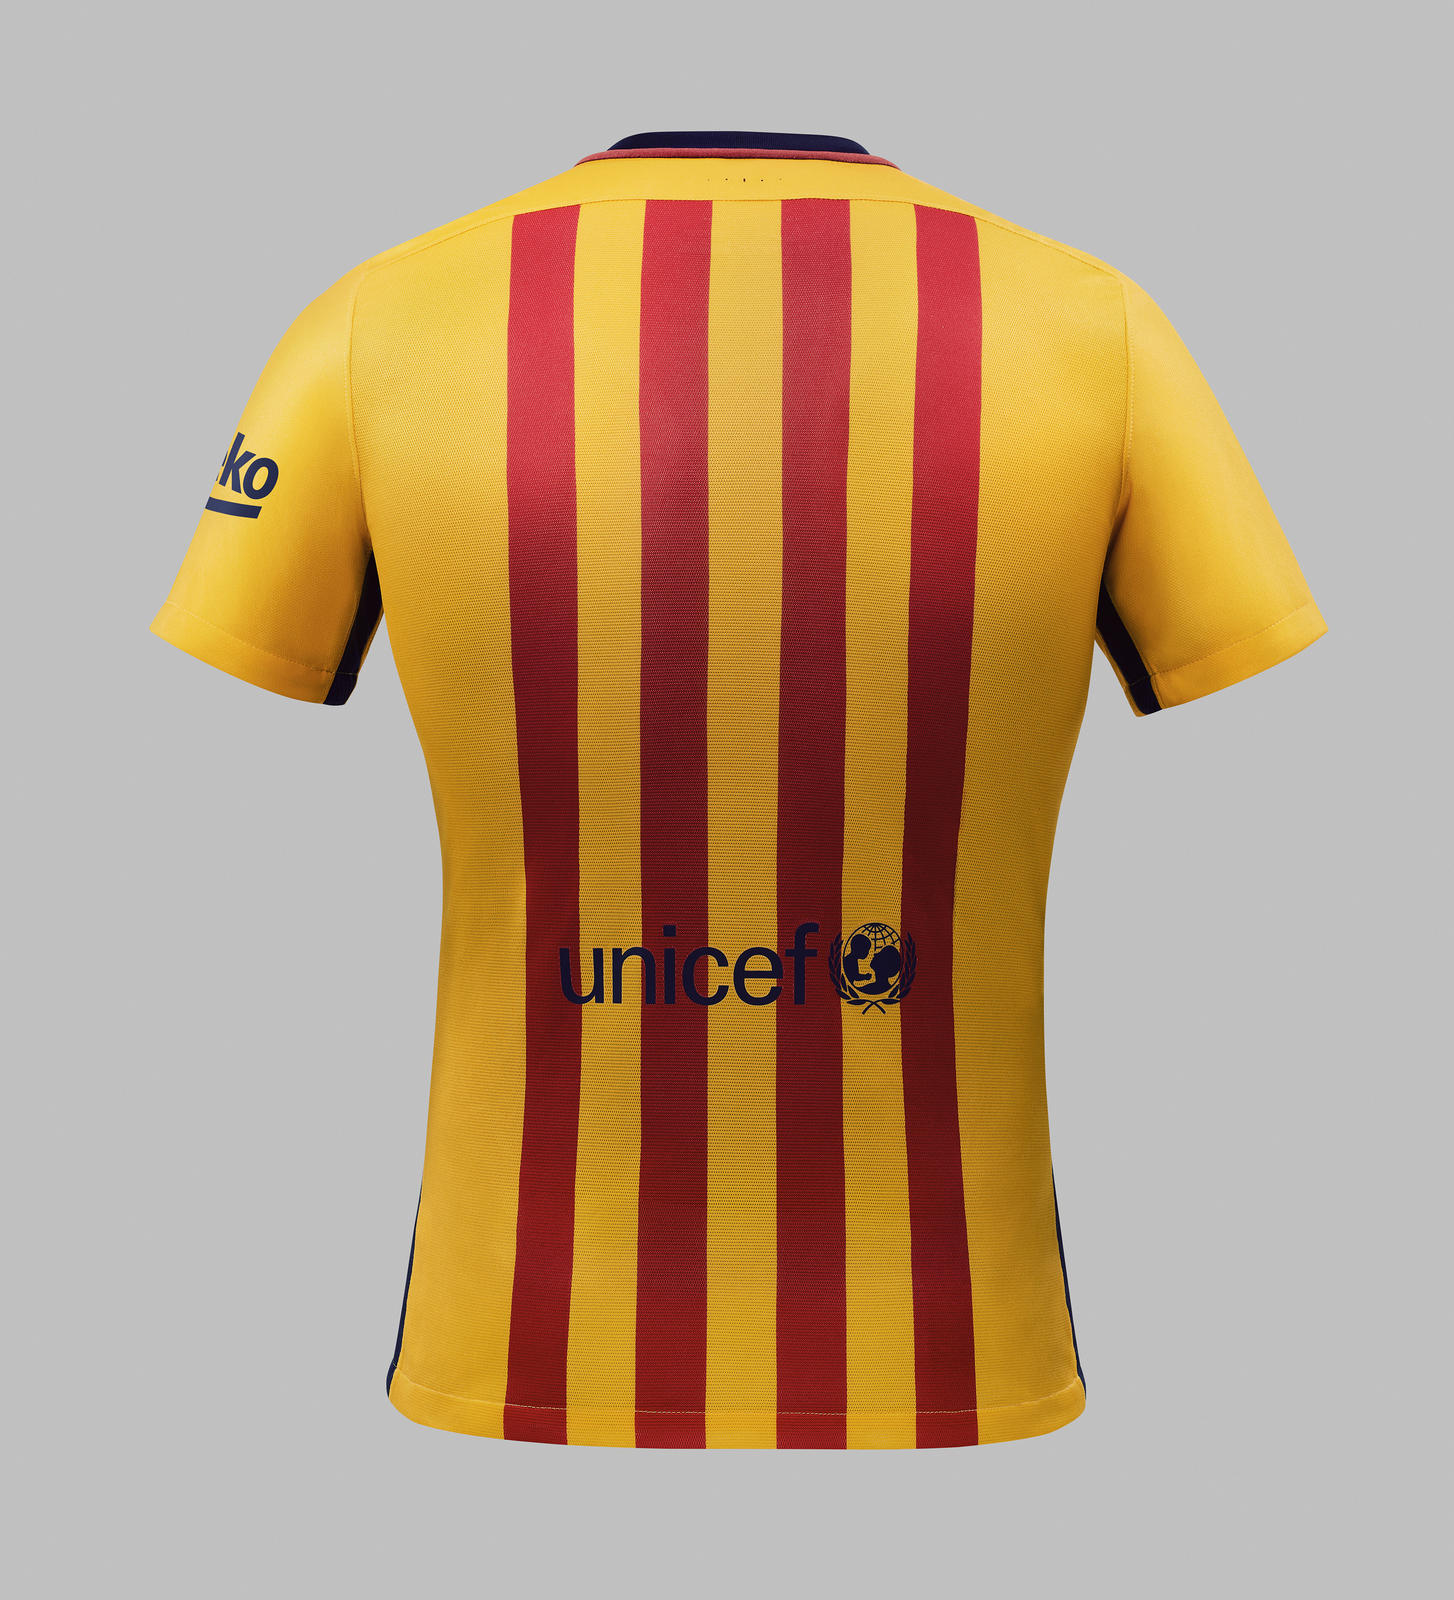 fc barcelona away kit 2016 nike football yellow